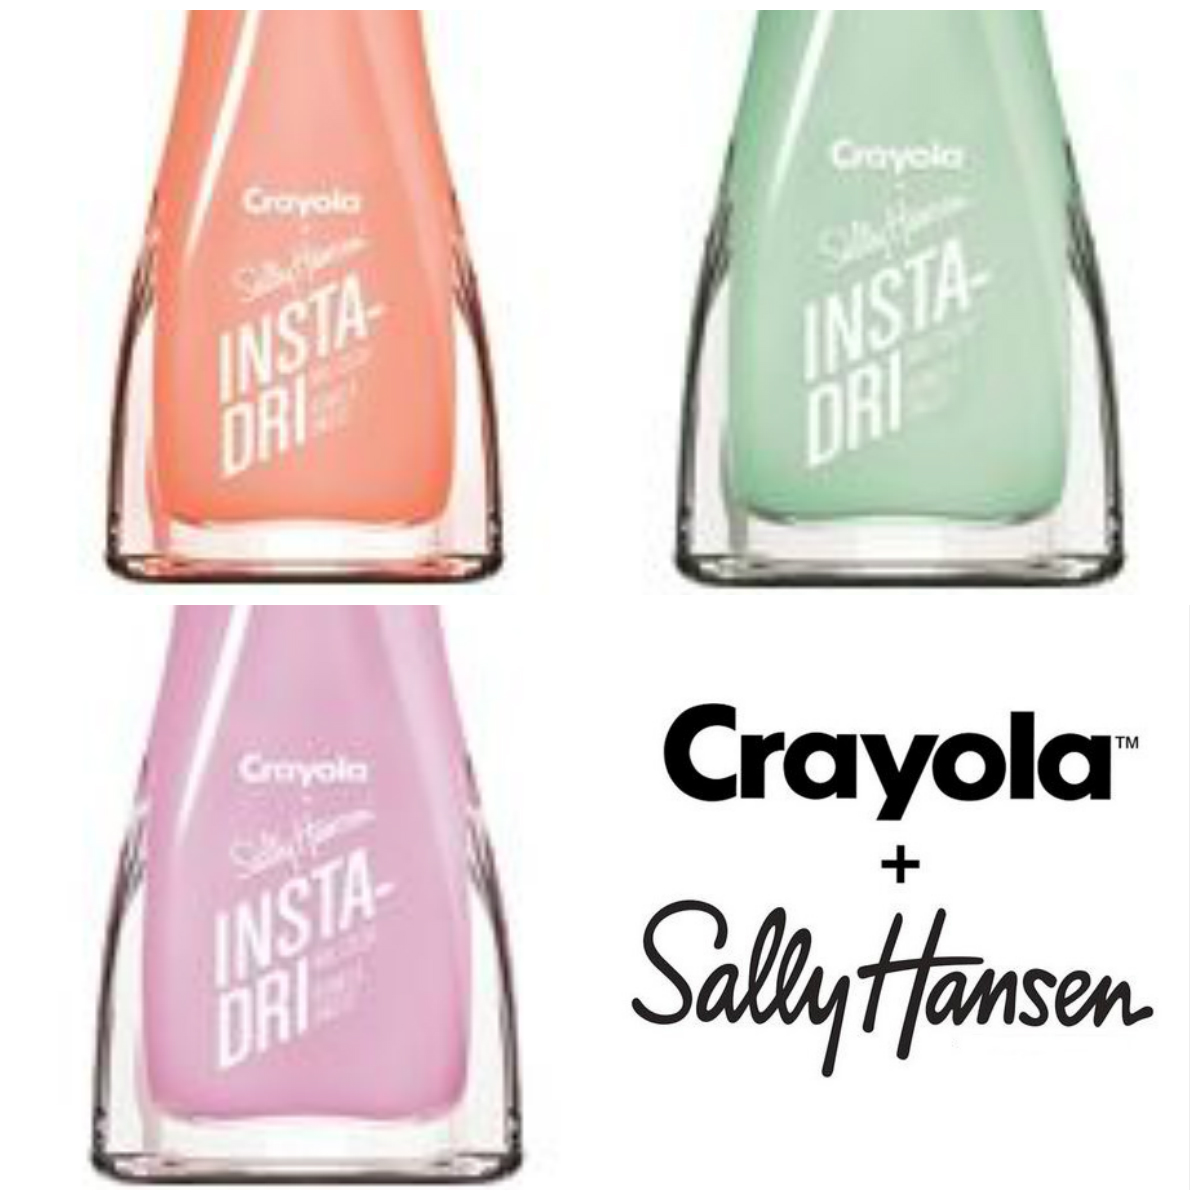 Grape Fizz Nails: New, Crayola and Sally Hansen Insta-dri Collection